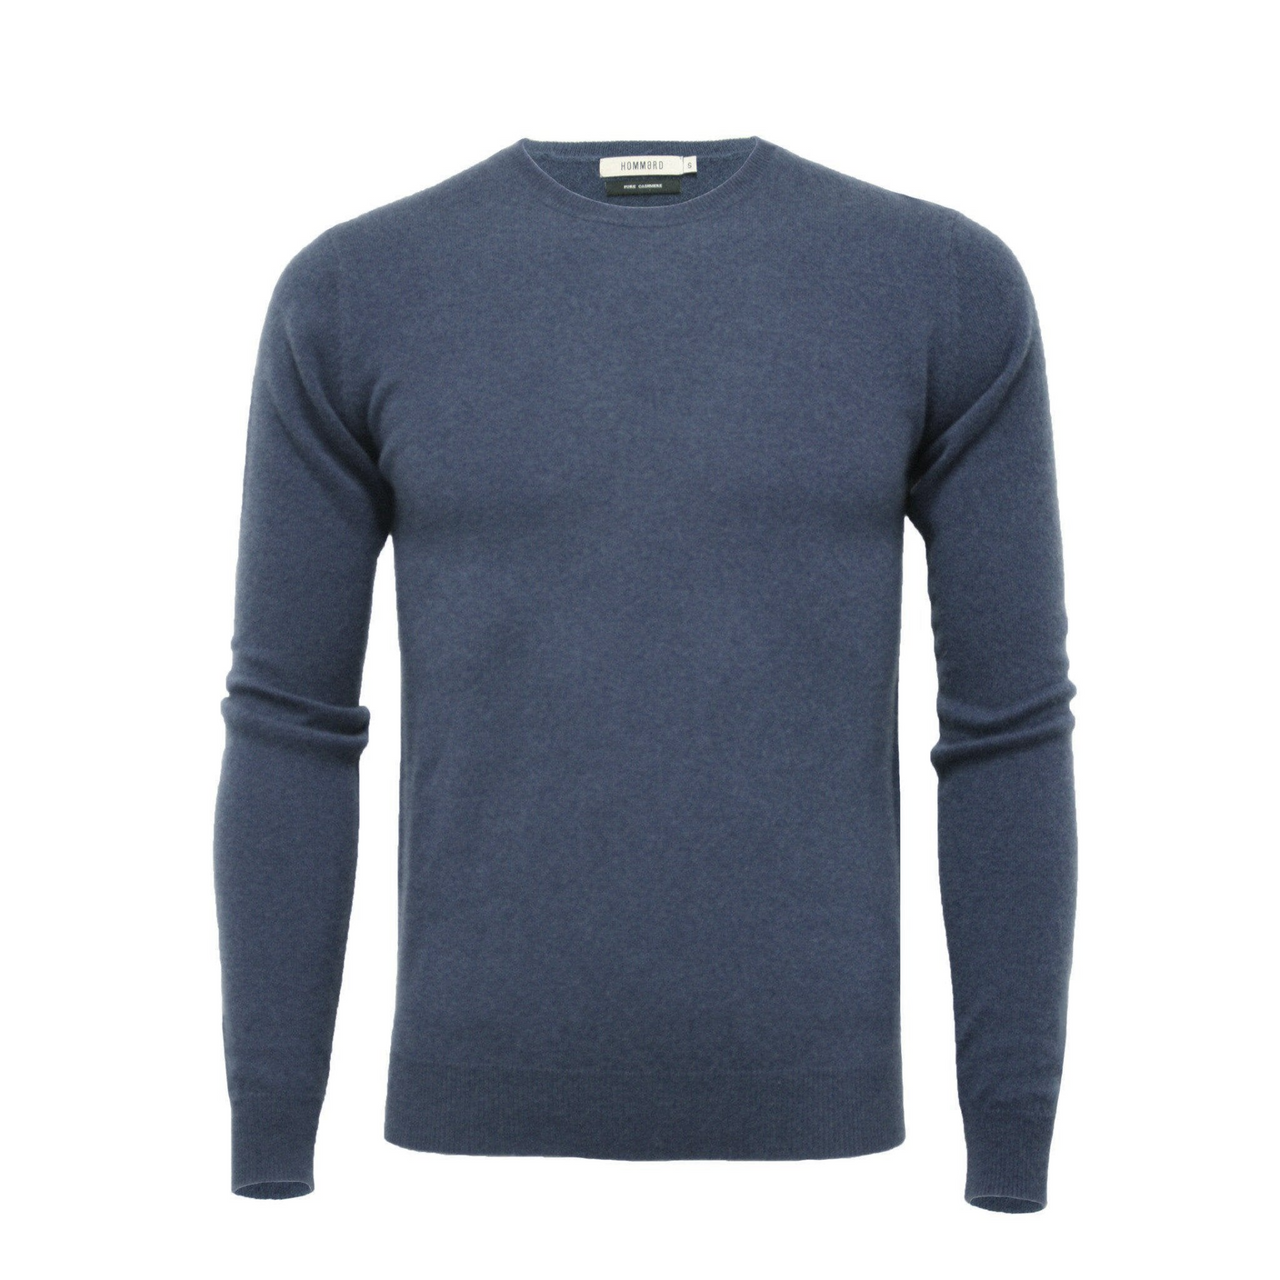 Jeans Blue Cashmere Crew Neck Sweater